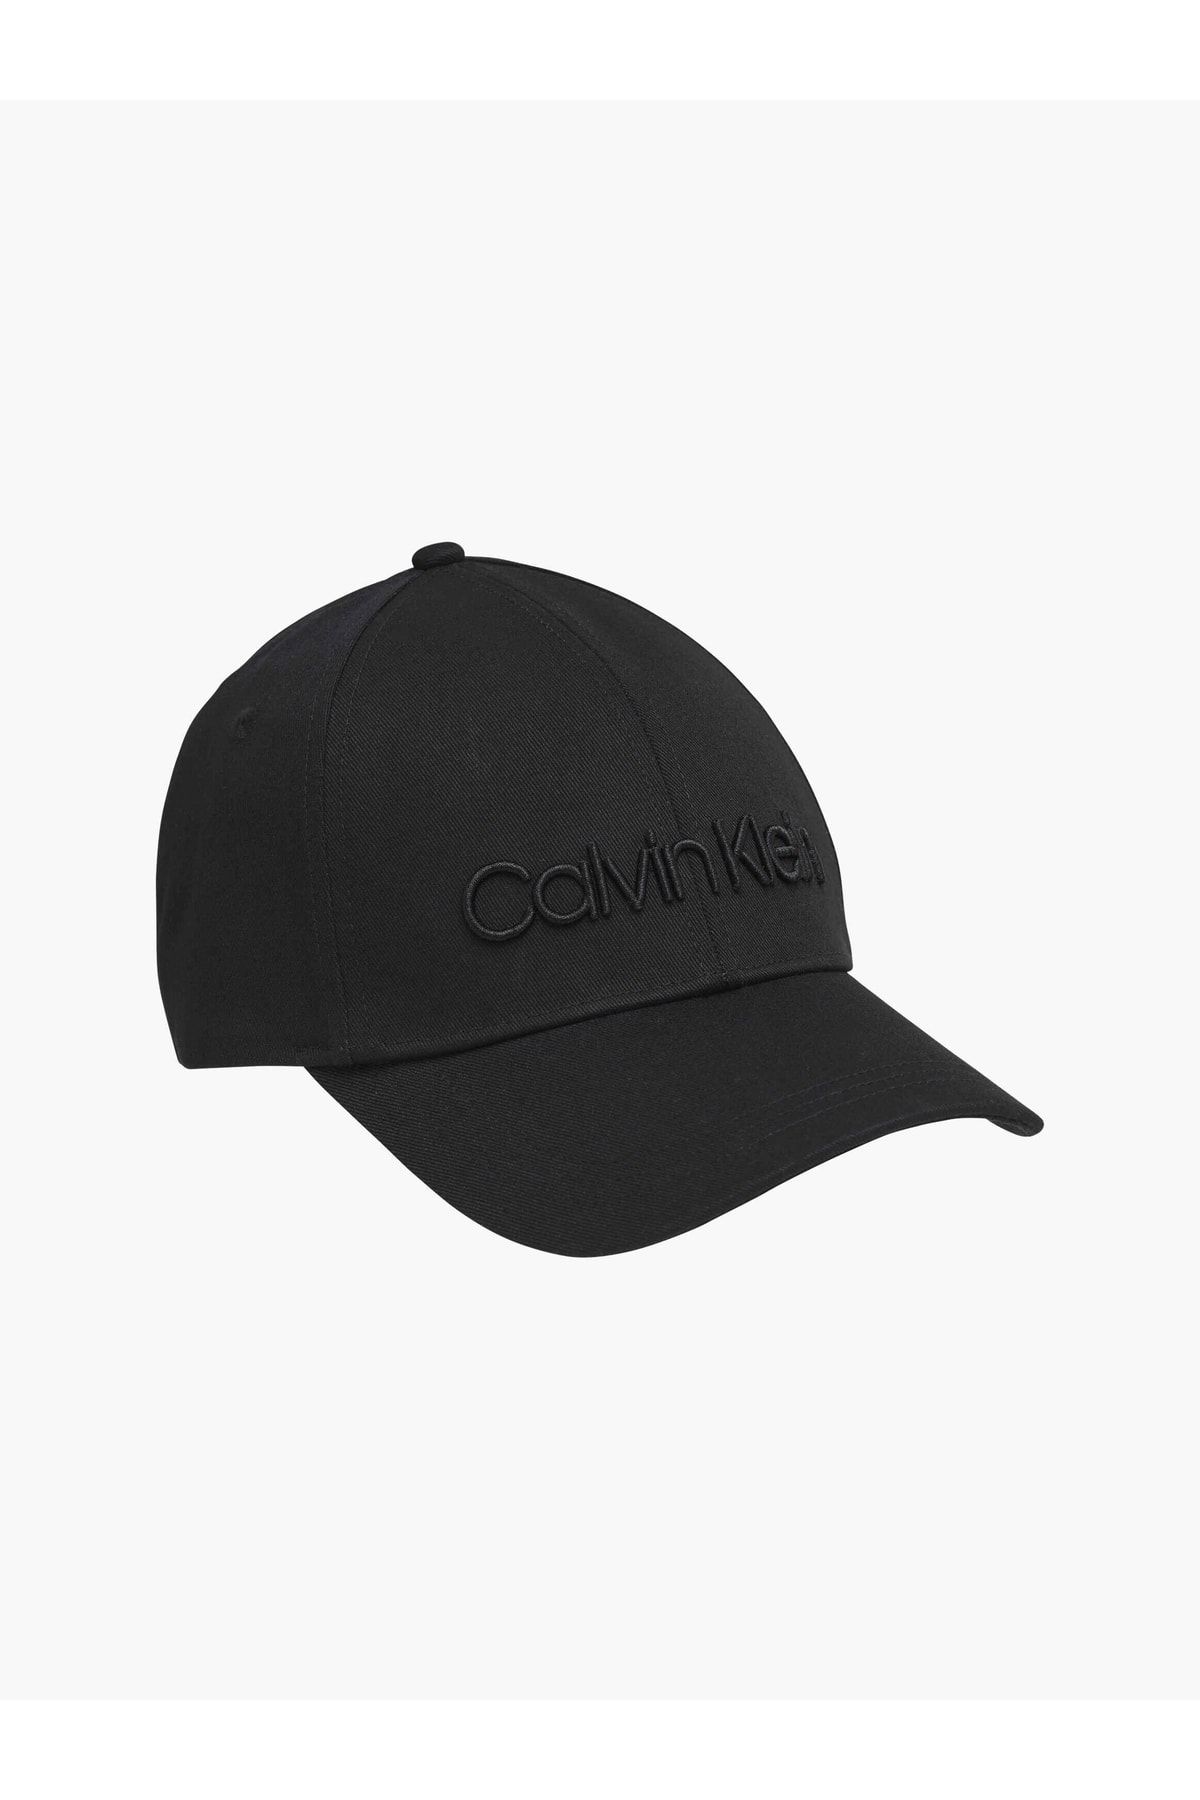 - Trendyol - Calvin - Klein Black Hat Casual